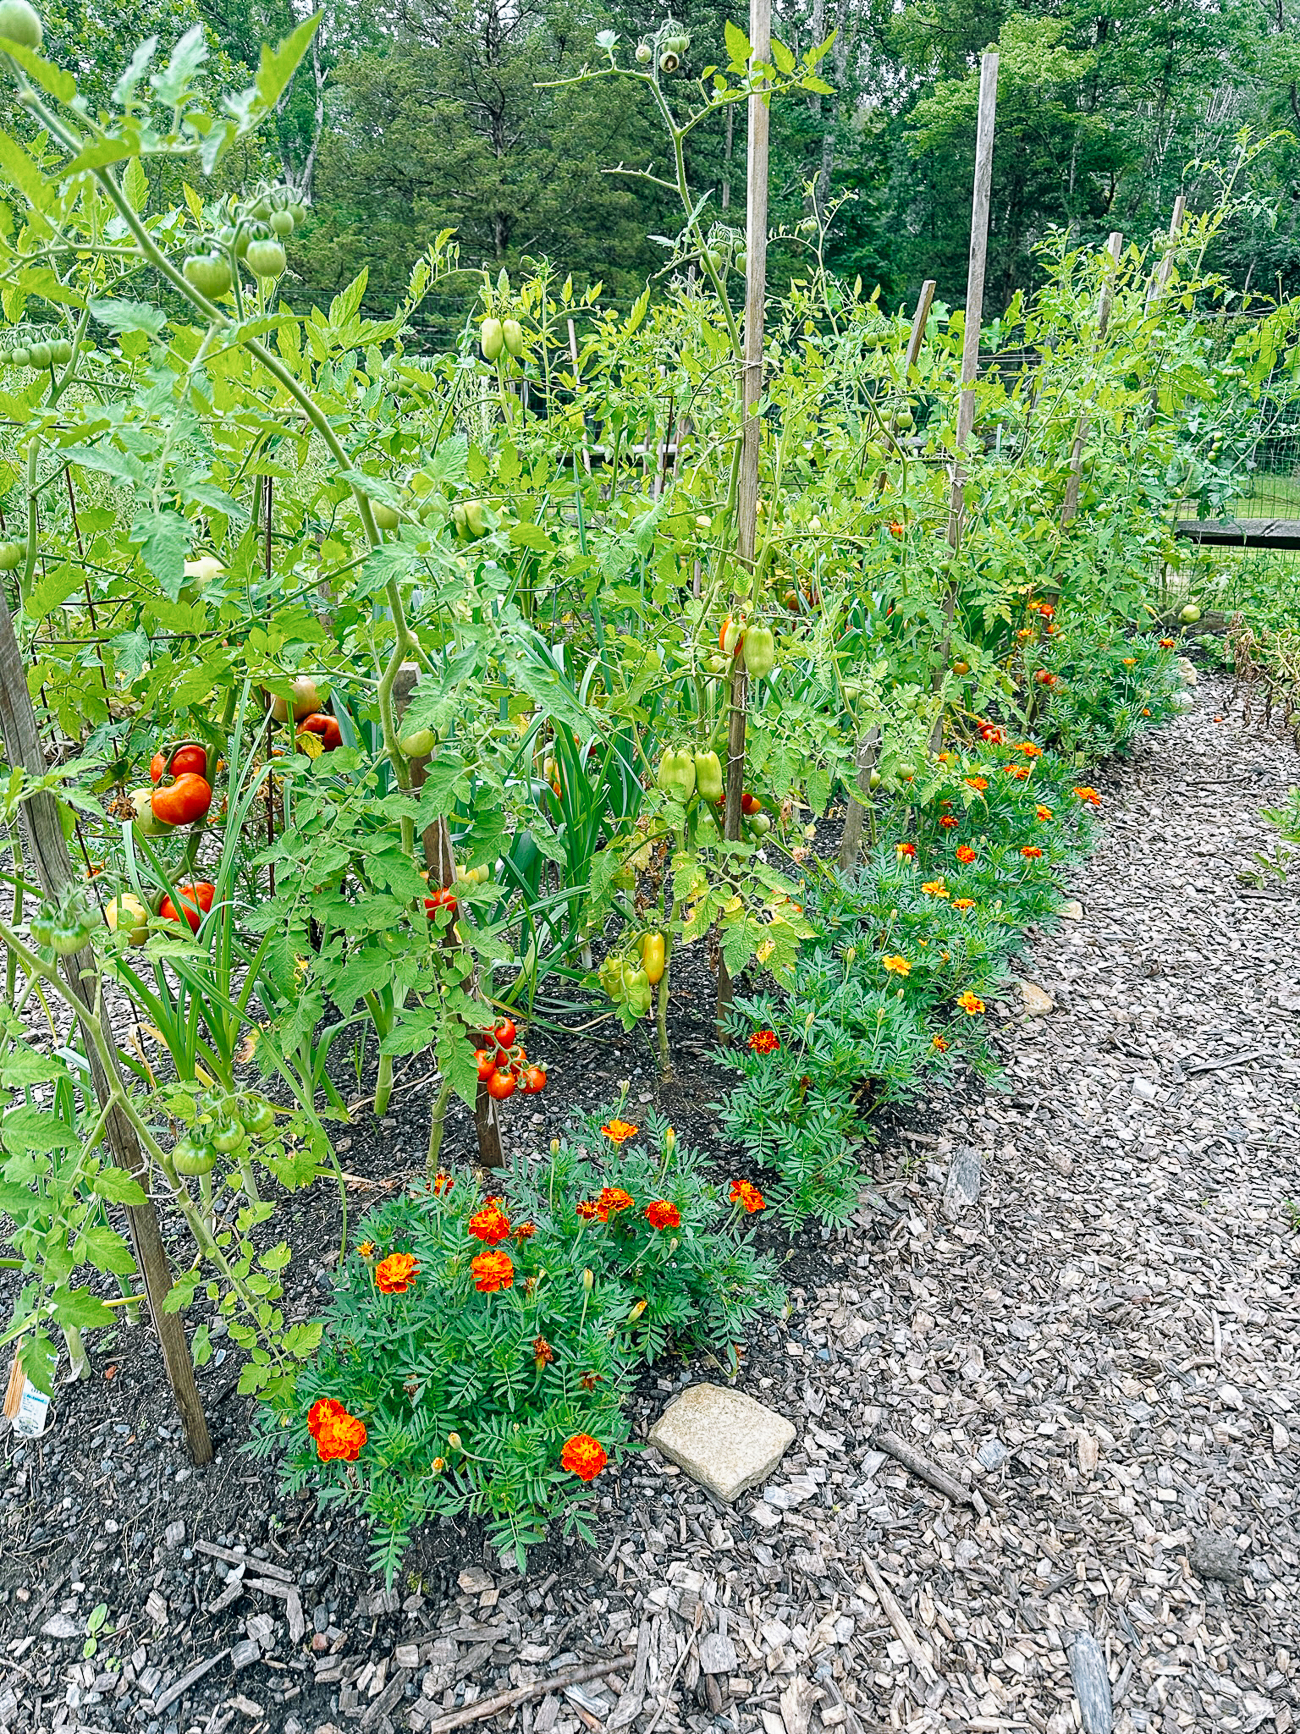 Tomato plants with marigolds